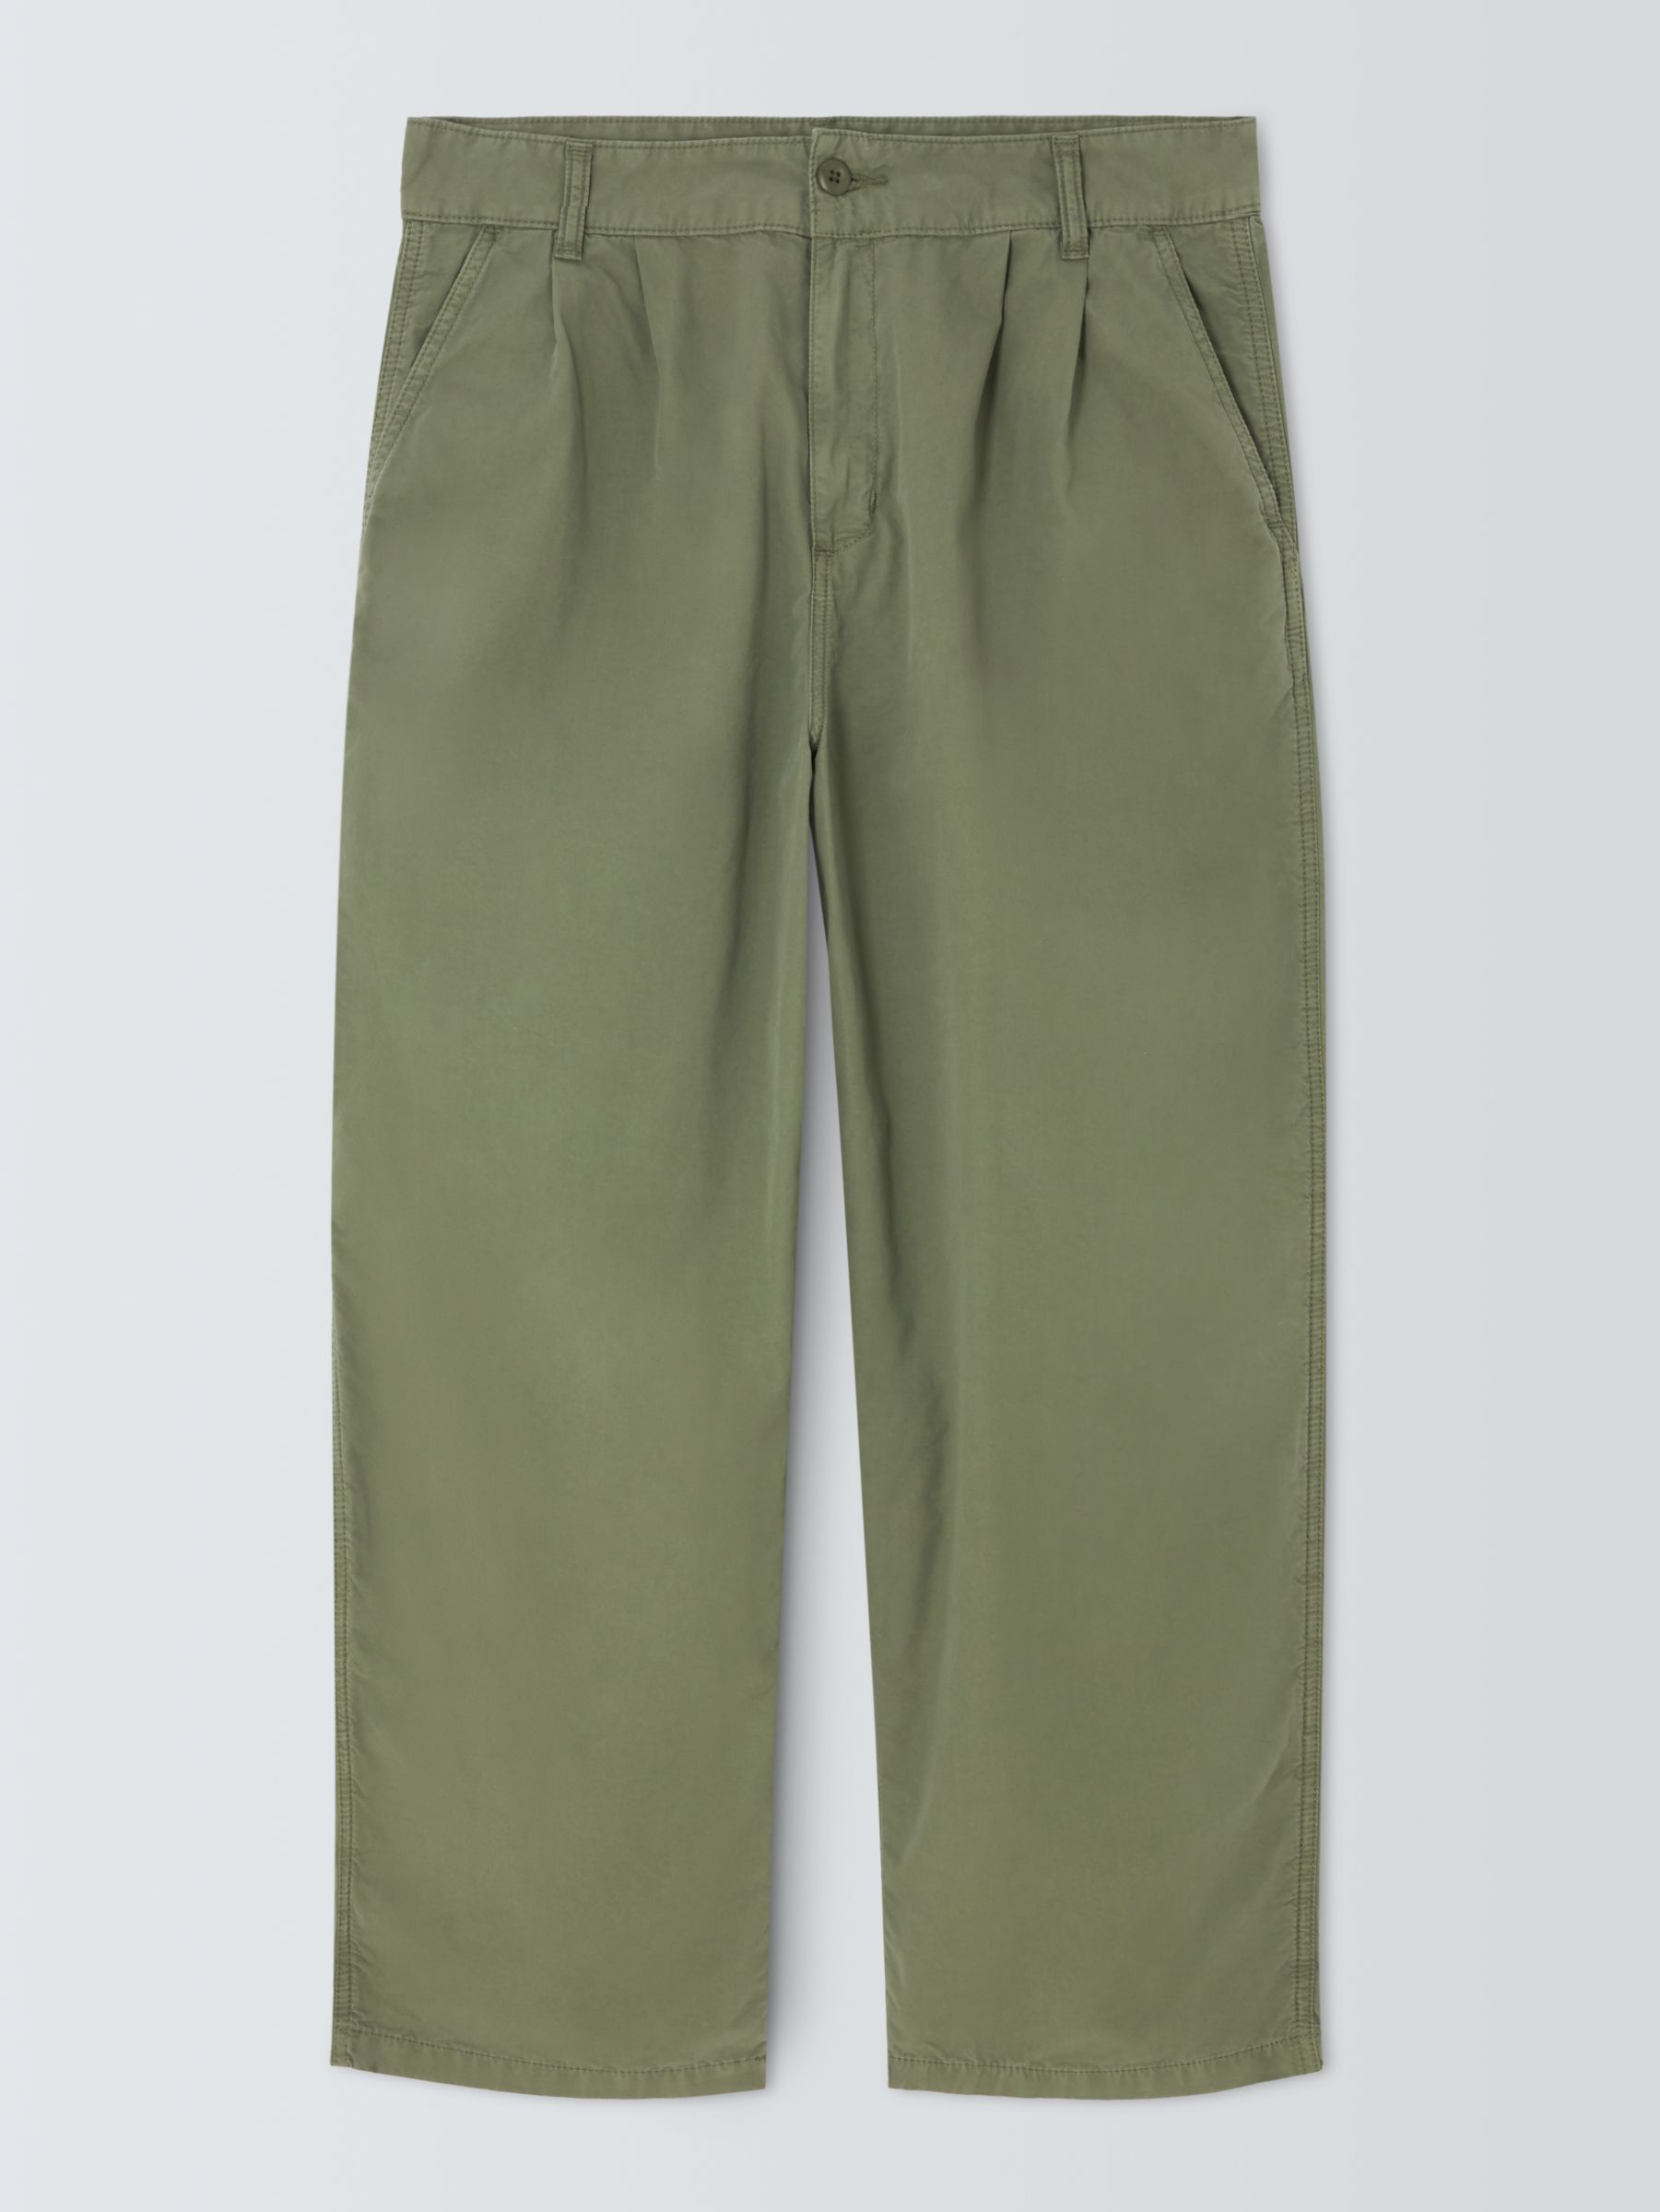 Carhartt WIP Colston Trousers, Green, 30R